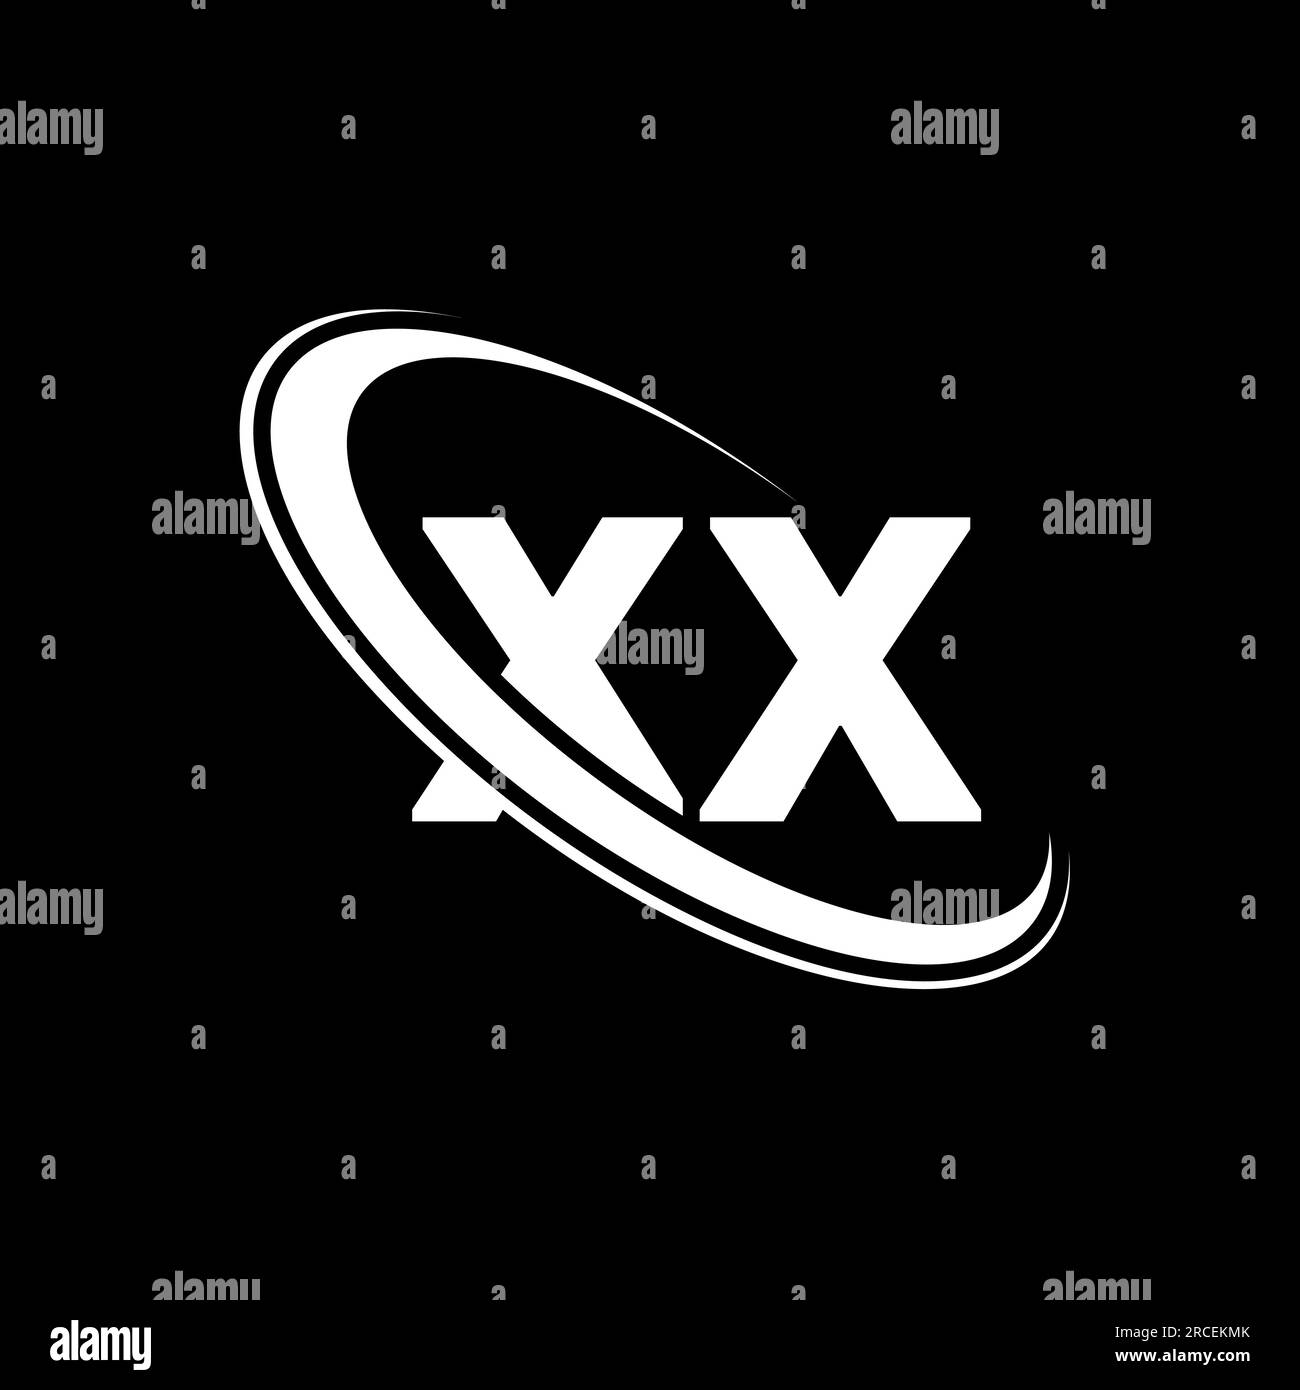 Xx Black and White Stock Photos & Images - Alamy